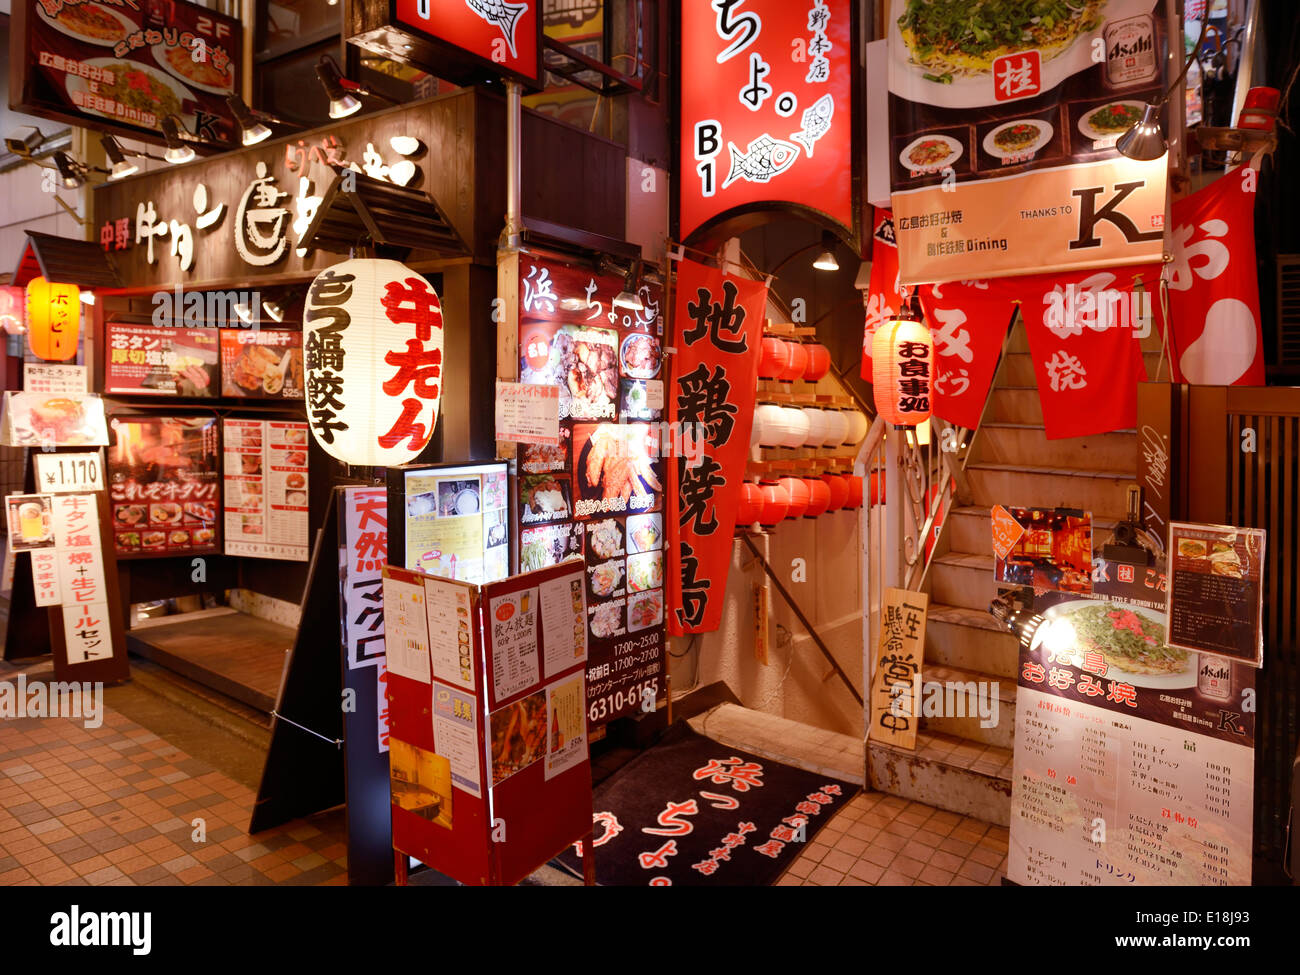 Japanese restaurants with colorful signs and displayed menus. Nakano, Tokyo, Japan. Stock Photo